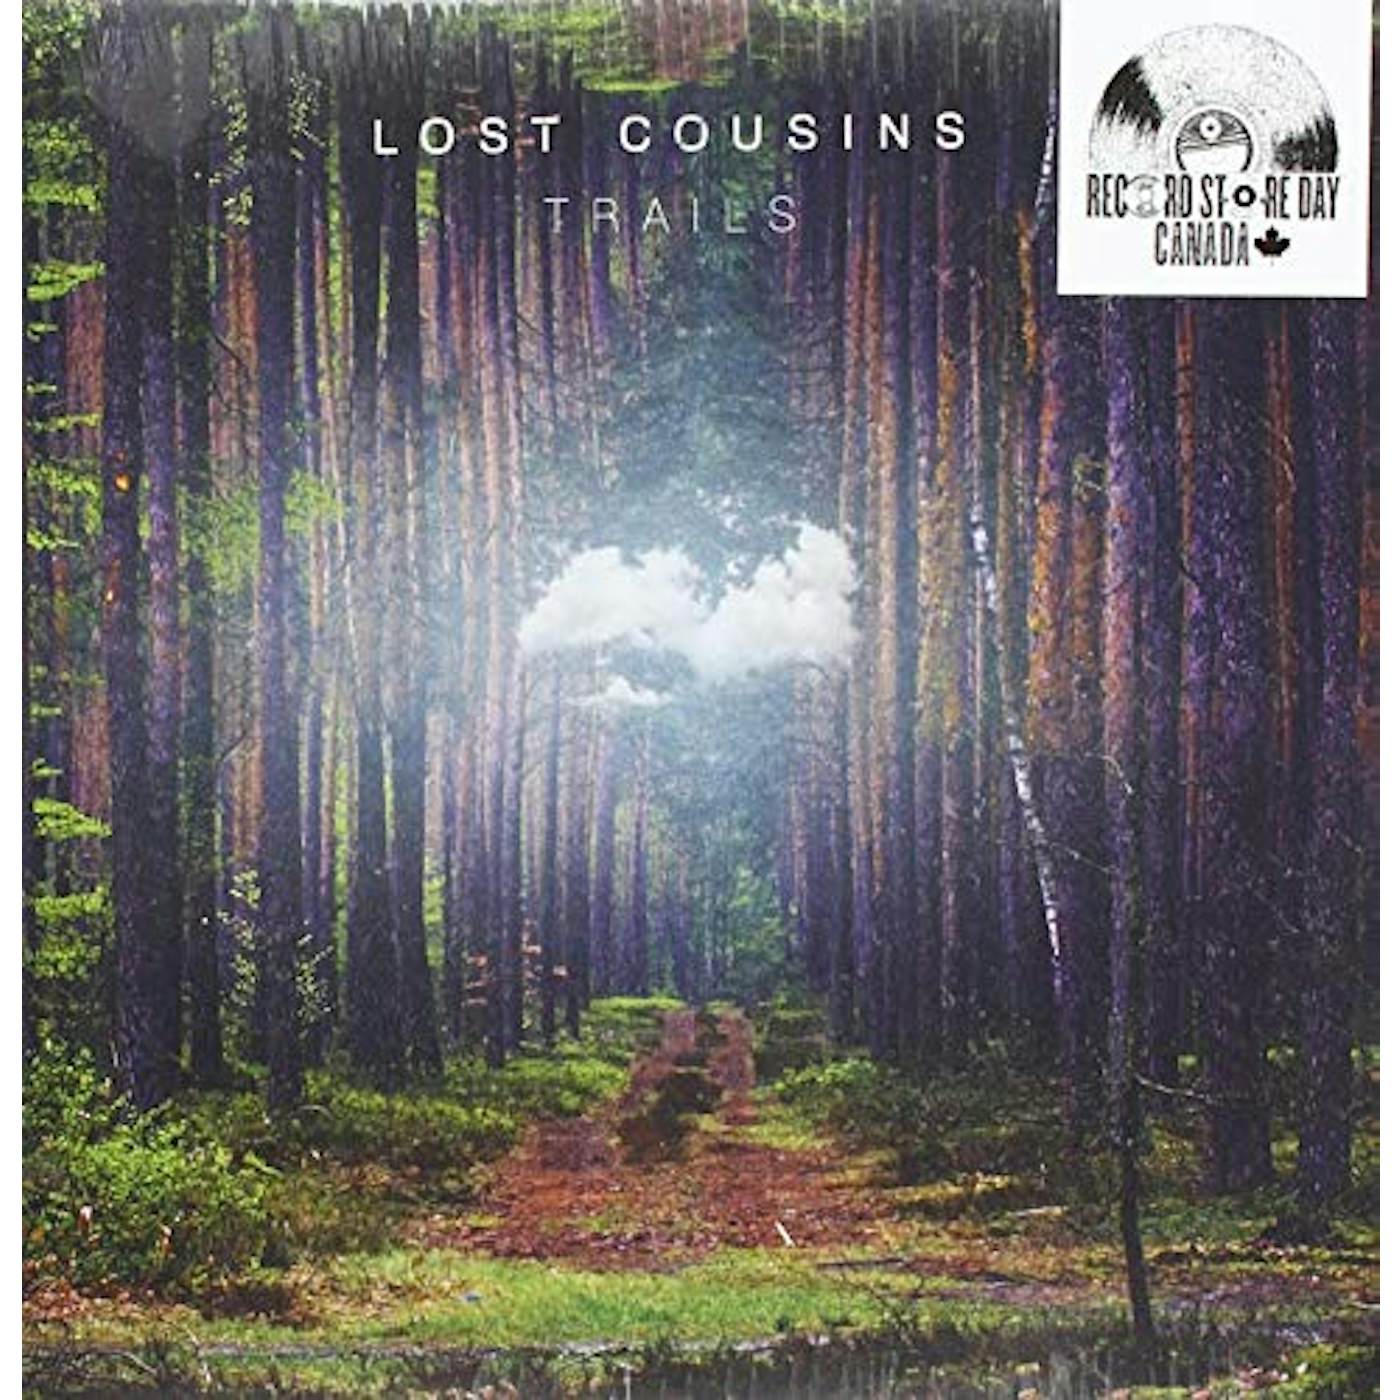 Lost Cousins Trails Vinyl Record